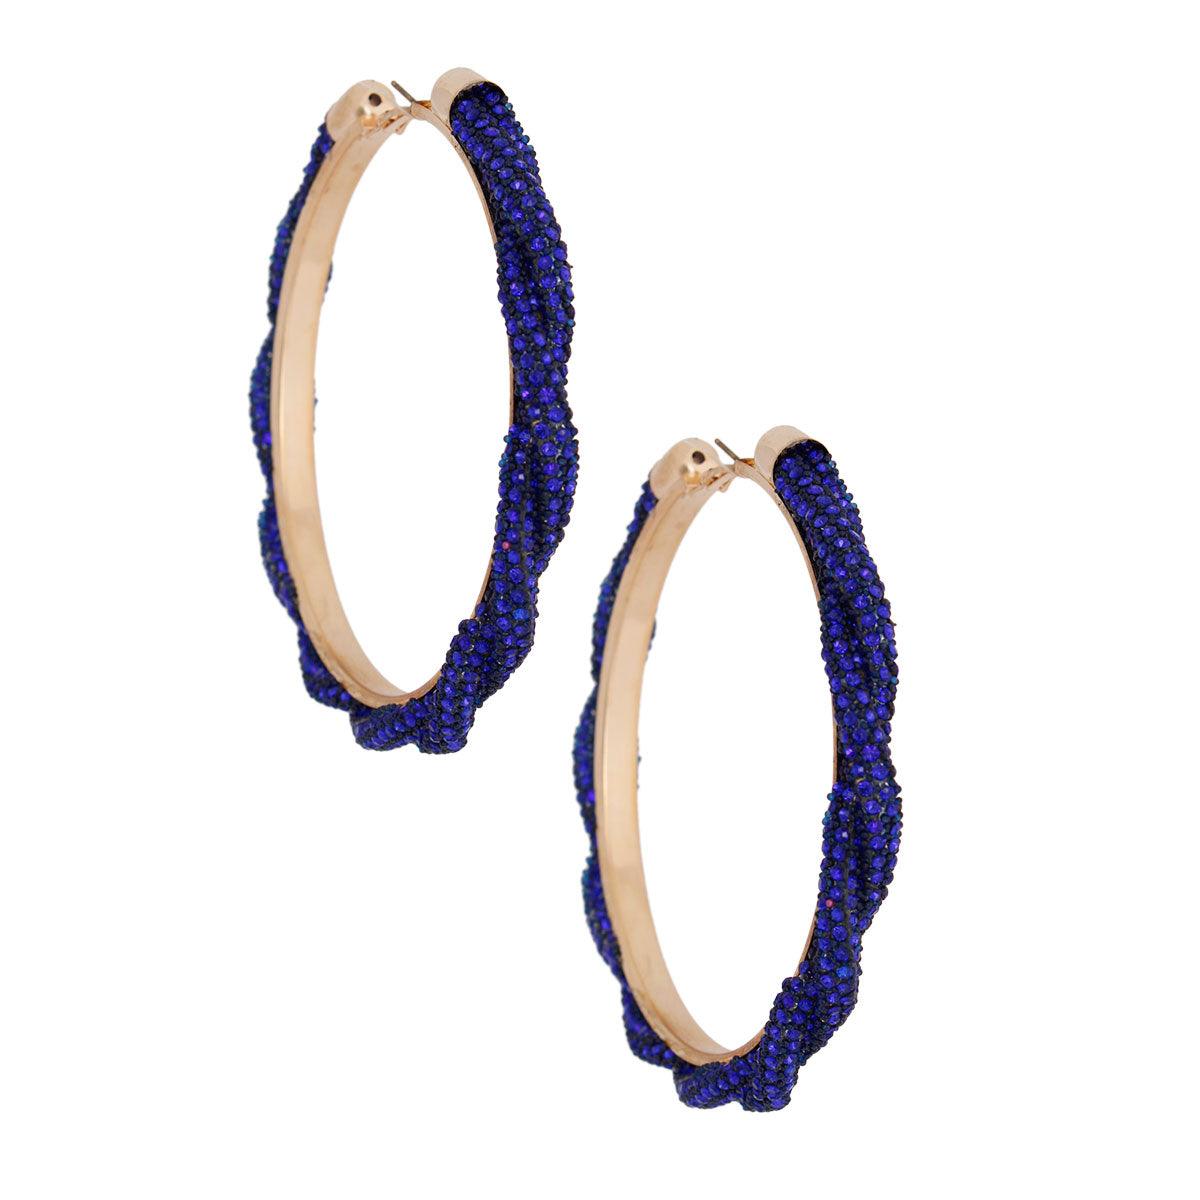 Dazzle Everyone: Blue Shimmer Hoop Earrings You Need Now!